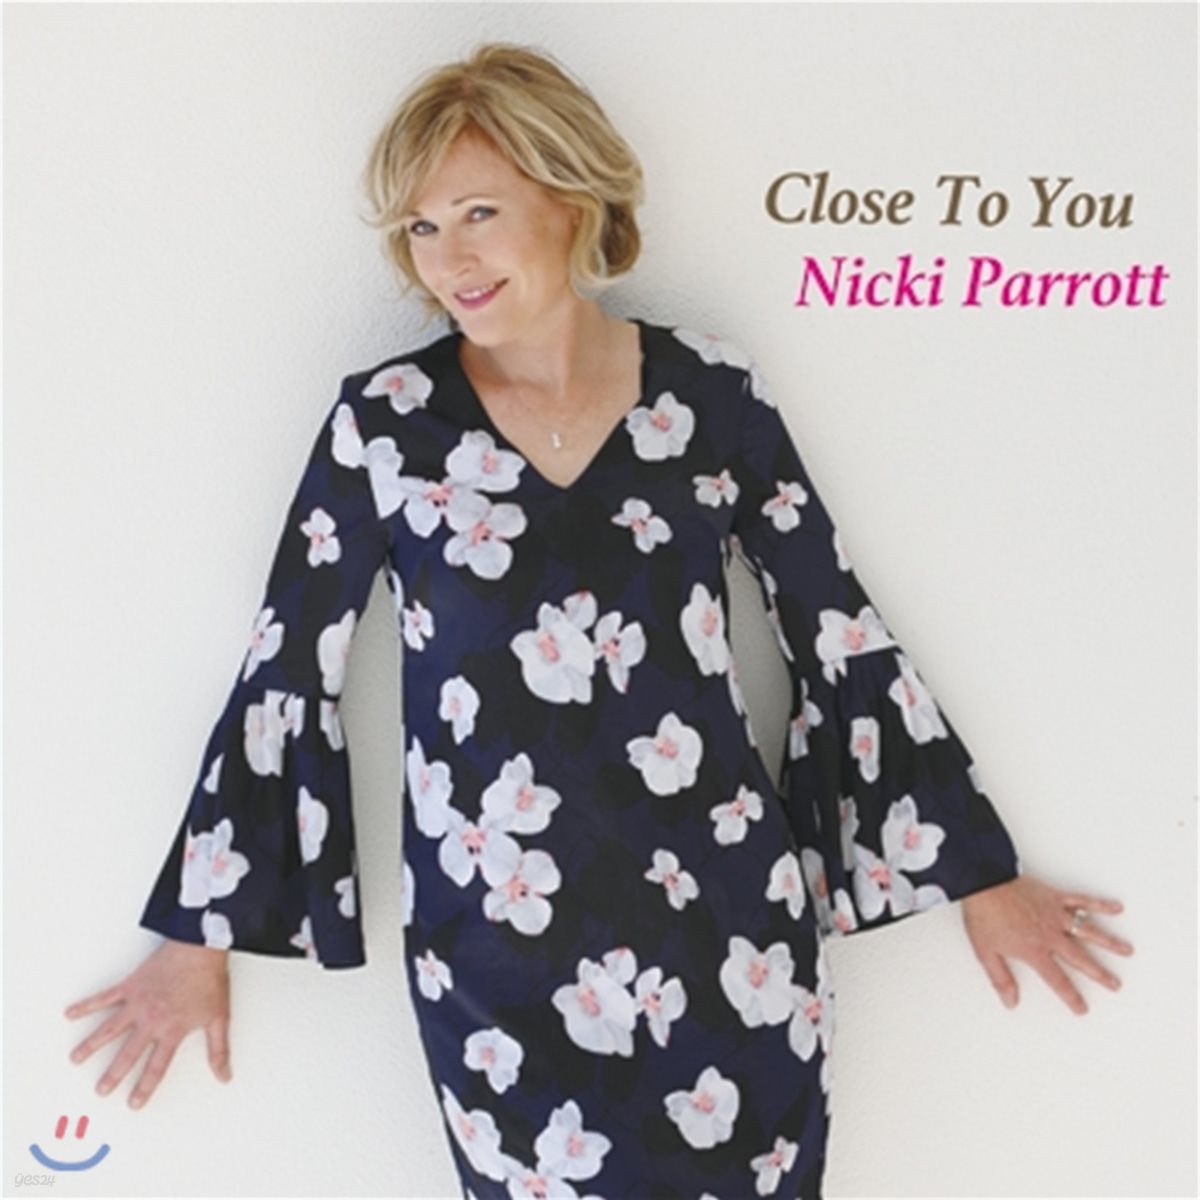 Nicki Parrott - Close To You / Burt Bacharach Song Book 니키 패럿이 부르는 버트 바카락 [LP]